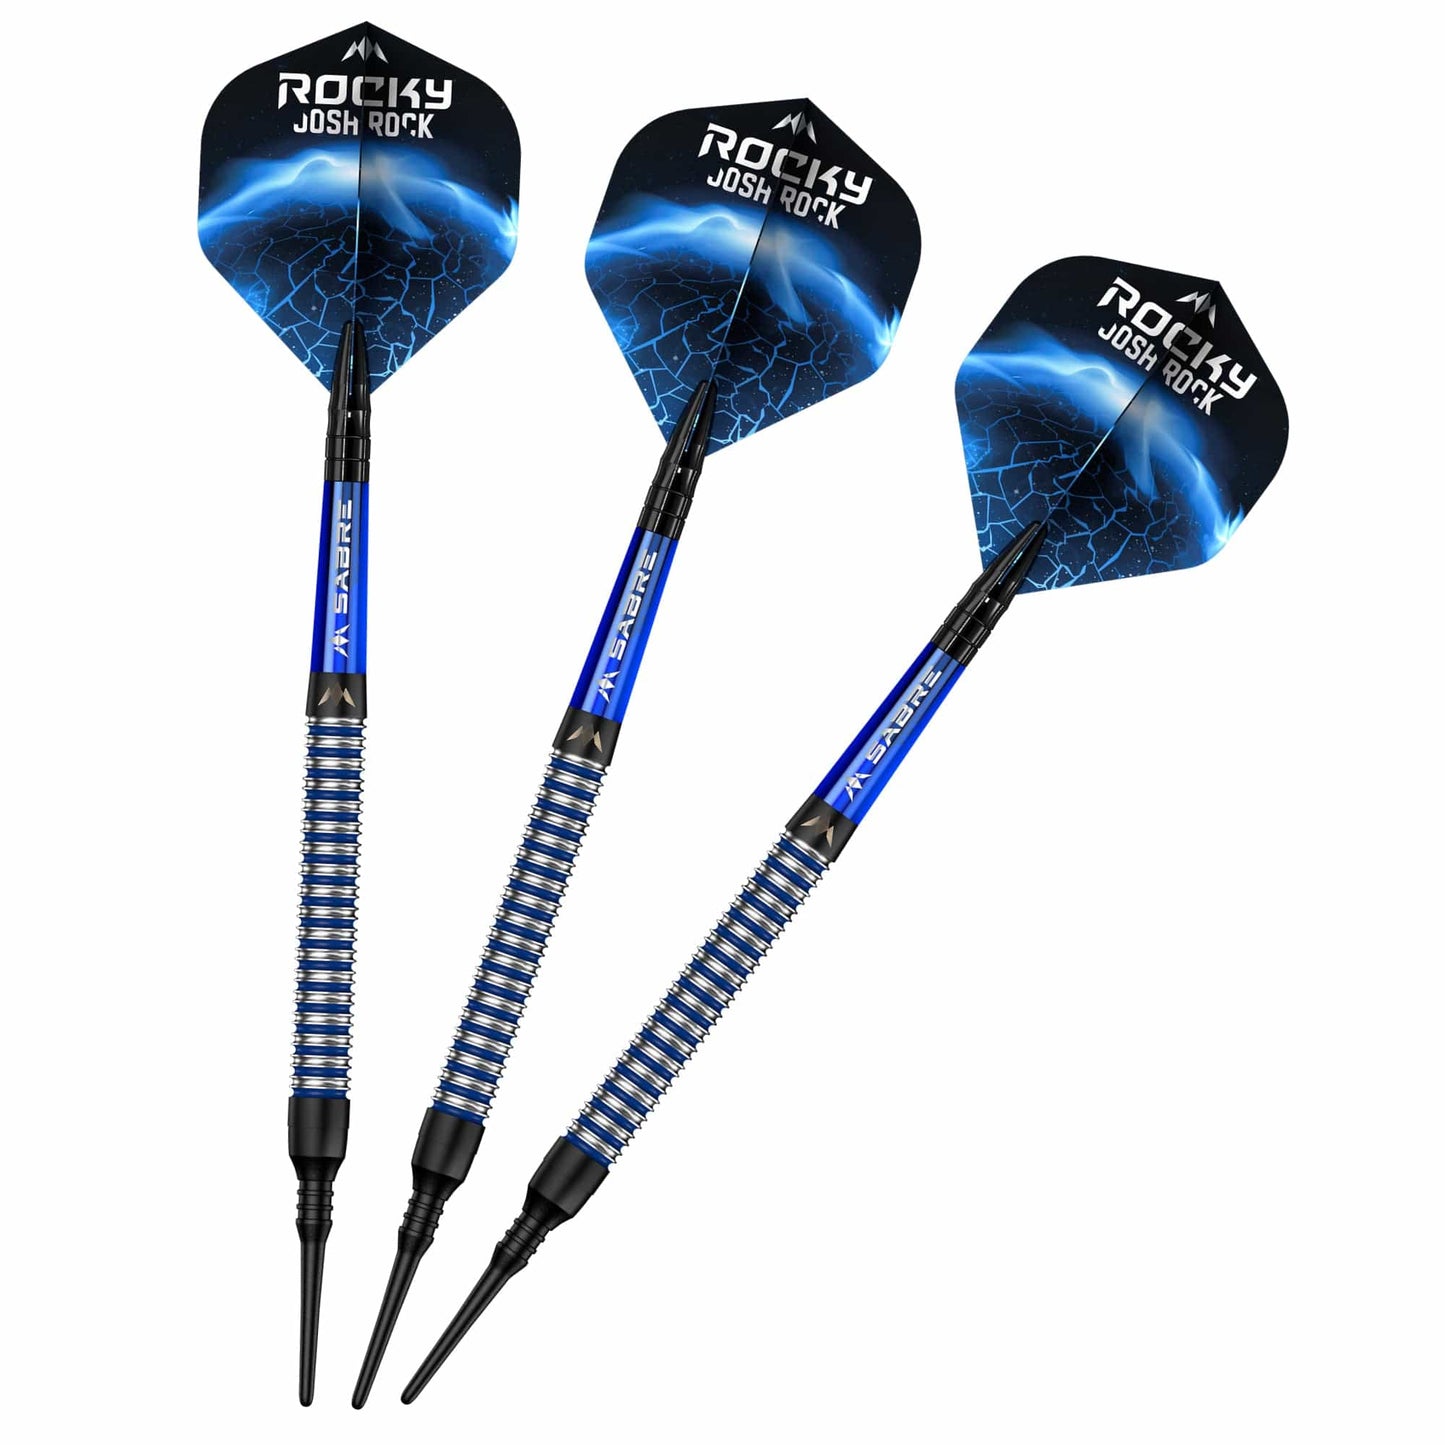 Mission Josh Rock Darts - Soft Tip - The Rock - Black & Blue - 18g 18g